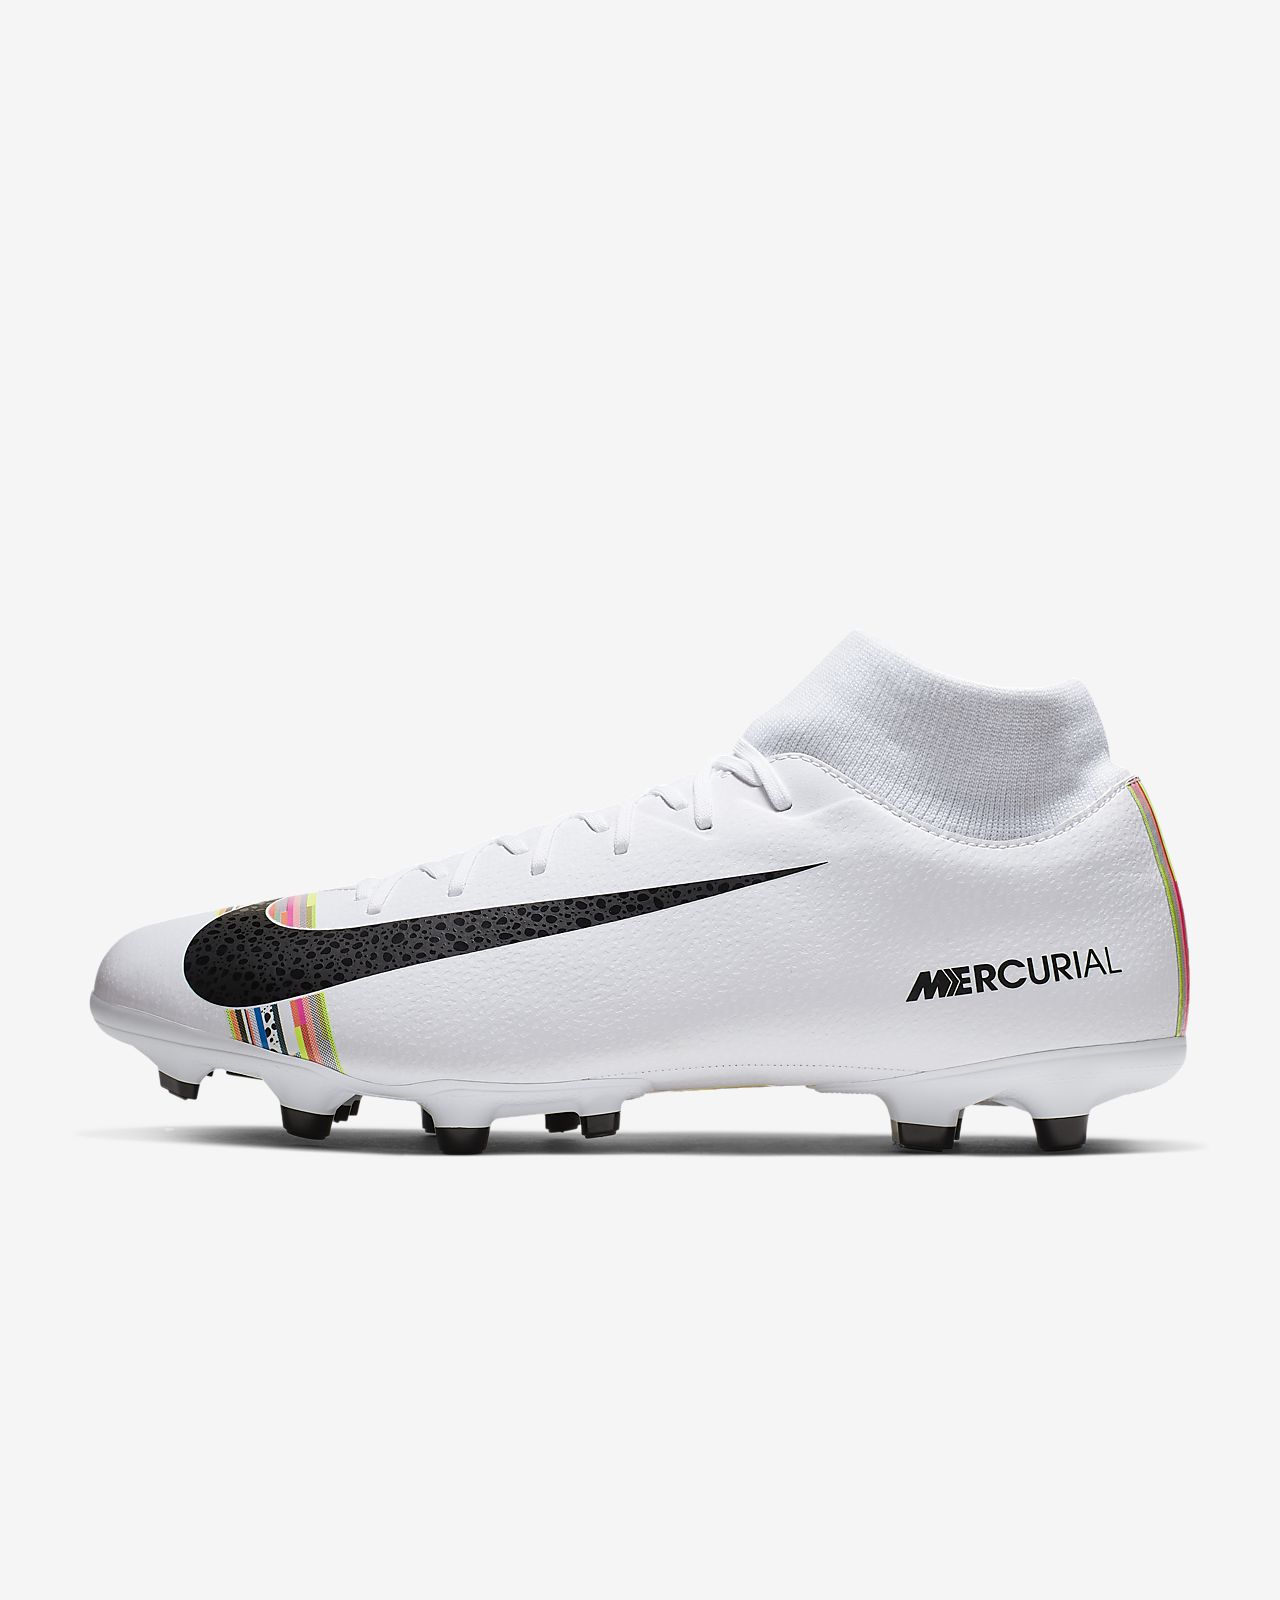 Nike Mercurial Vapor VII FG Soccer Football BOOTS Cr7